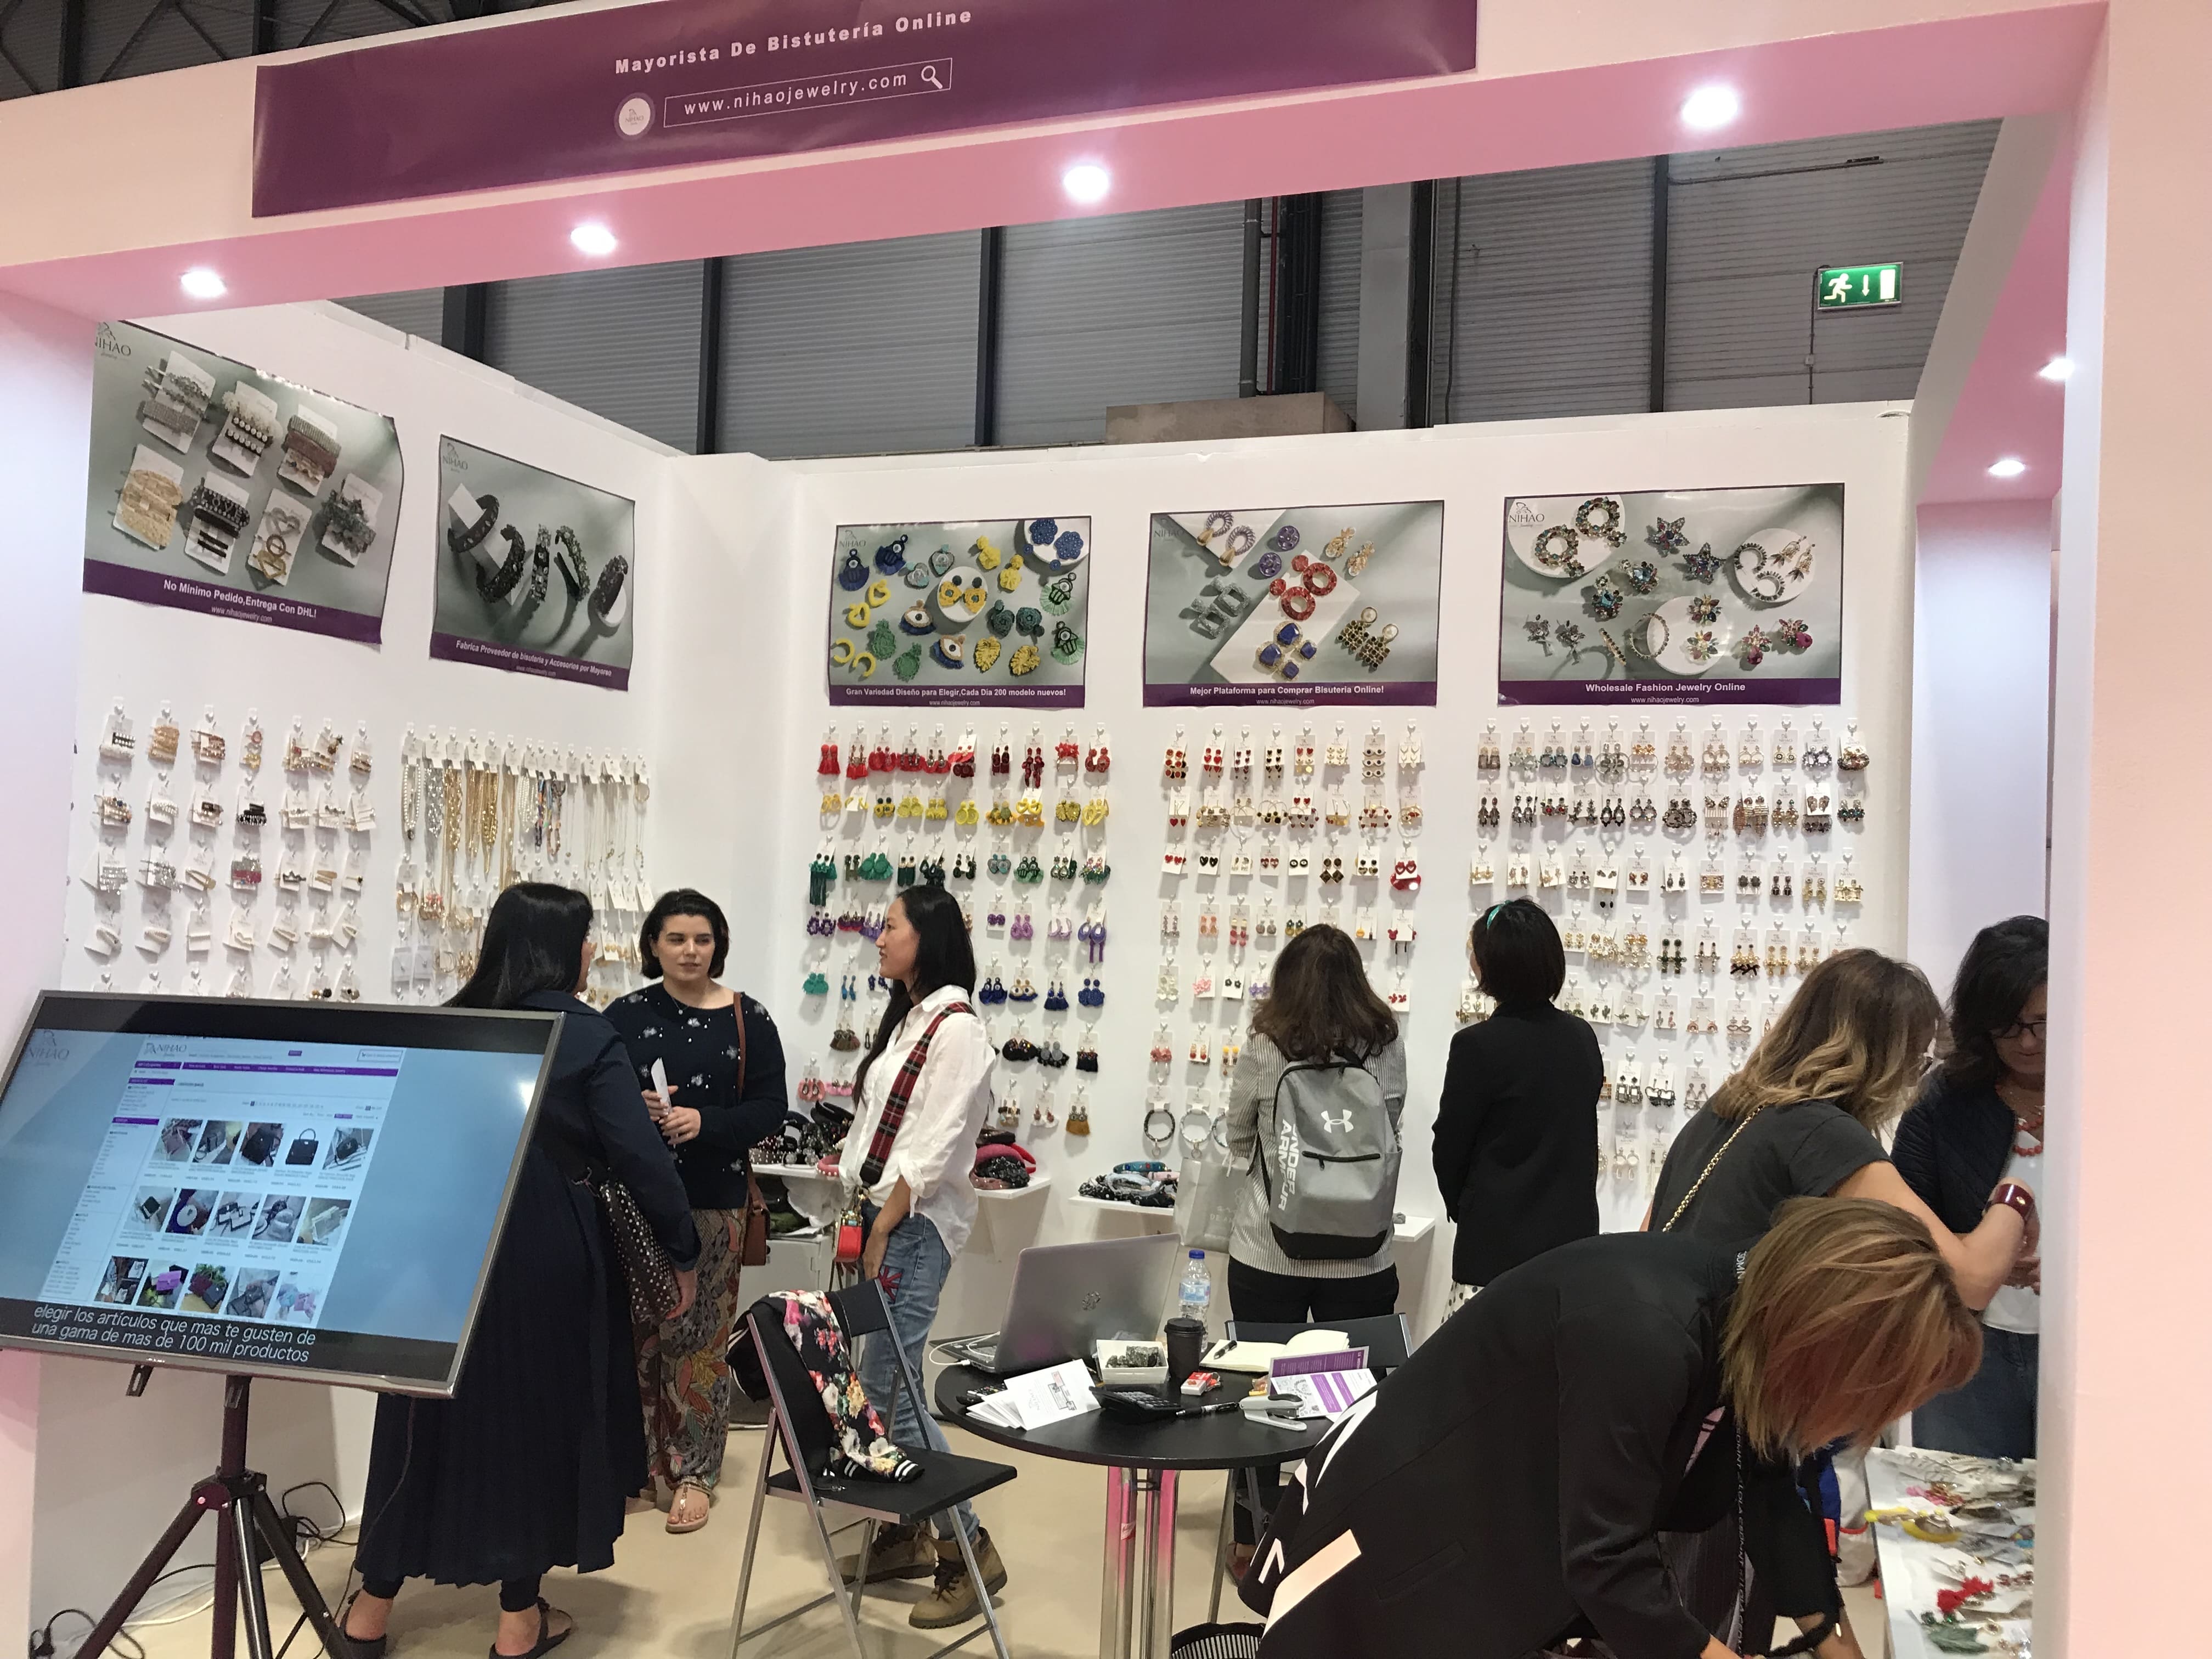 2019 Bistuteria Fair in Spain, the Nihaojewelry booth﻿